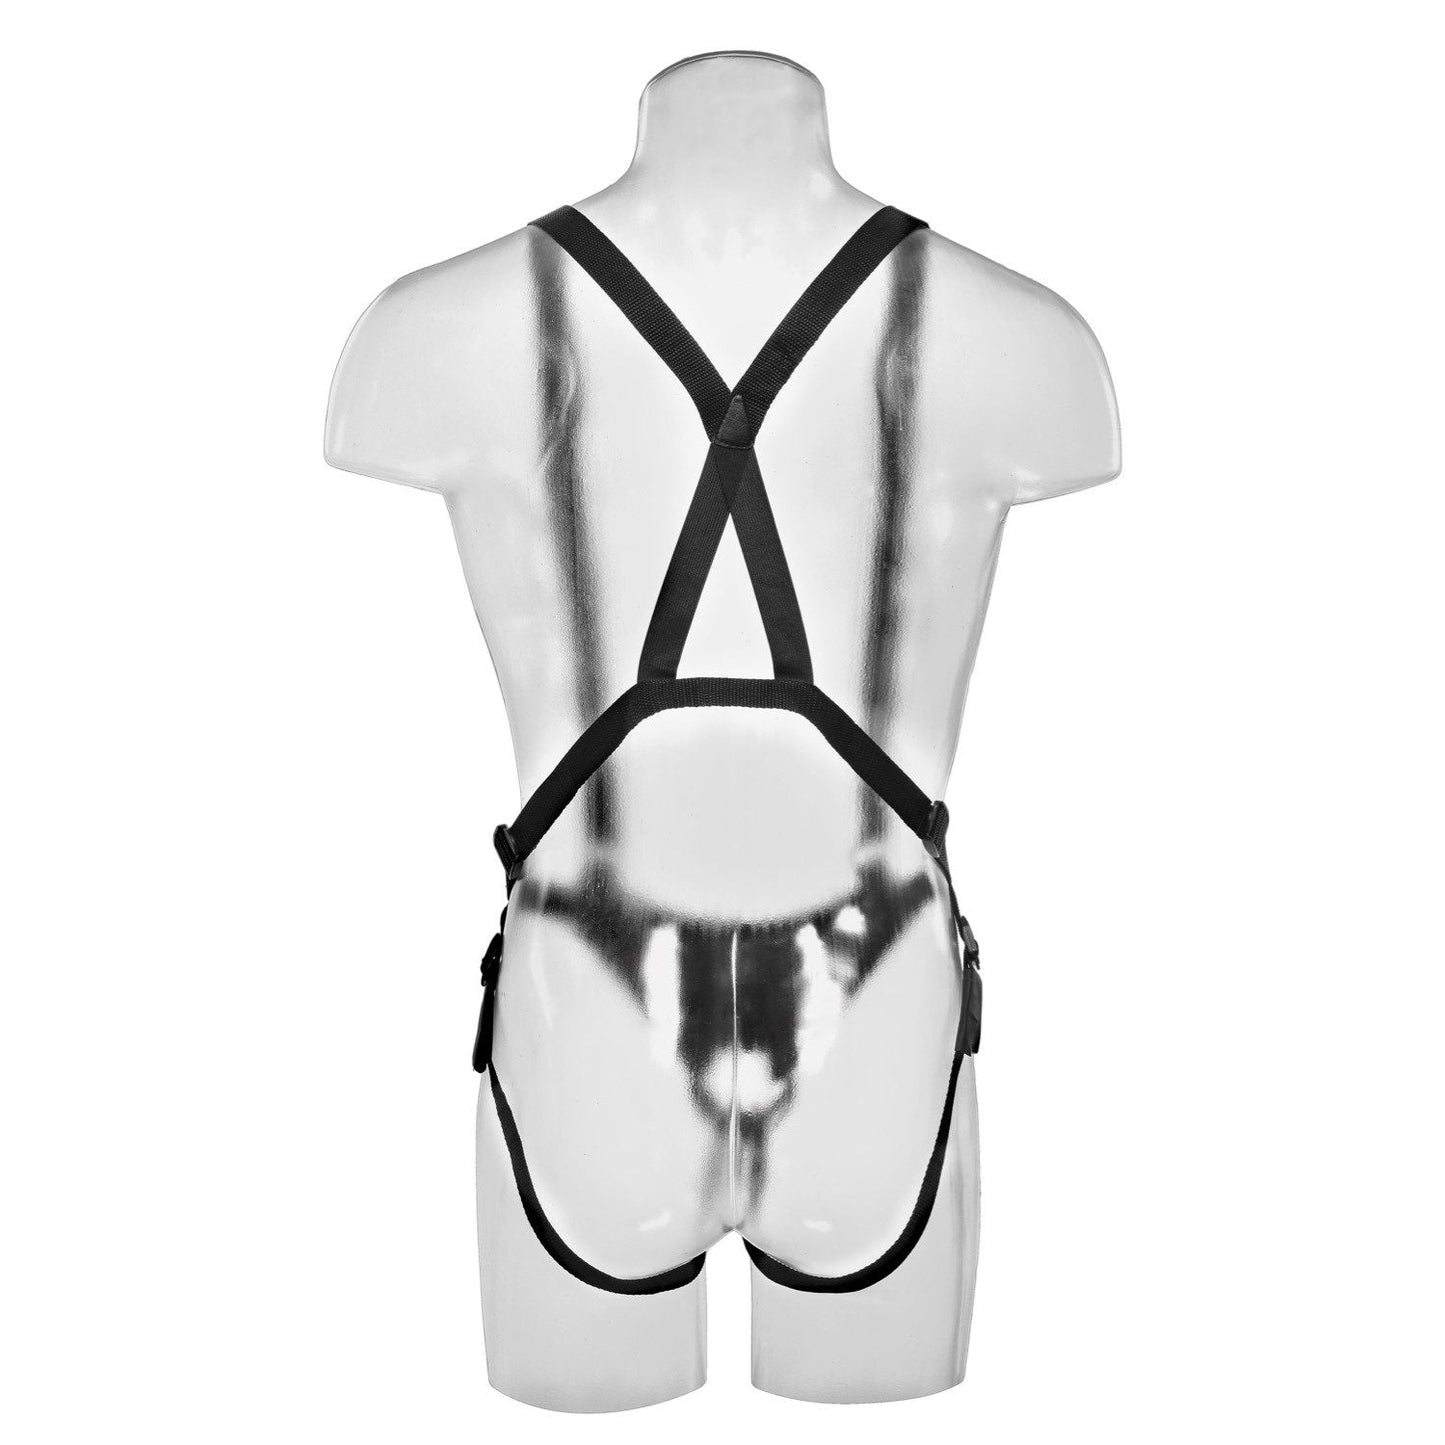 10" Hollow Strap-On Suspender System - Flesh 25.4 cm Hollow Strap-On with Suspender Harness